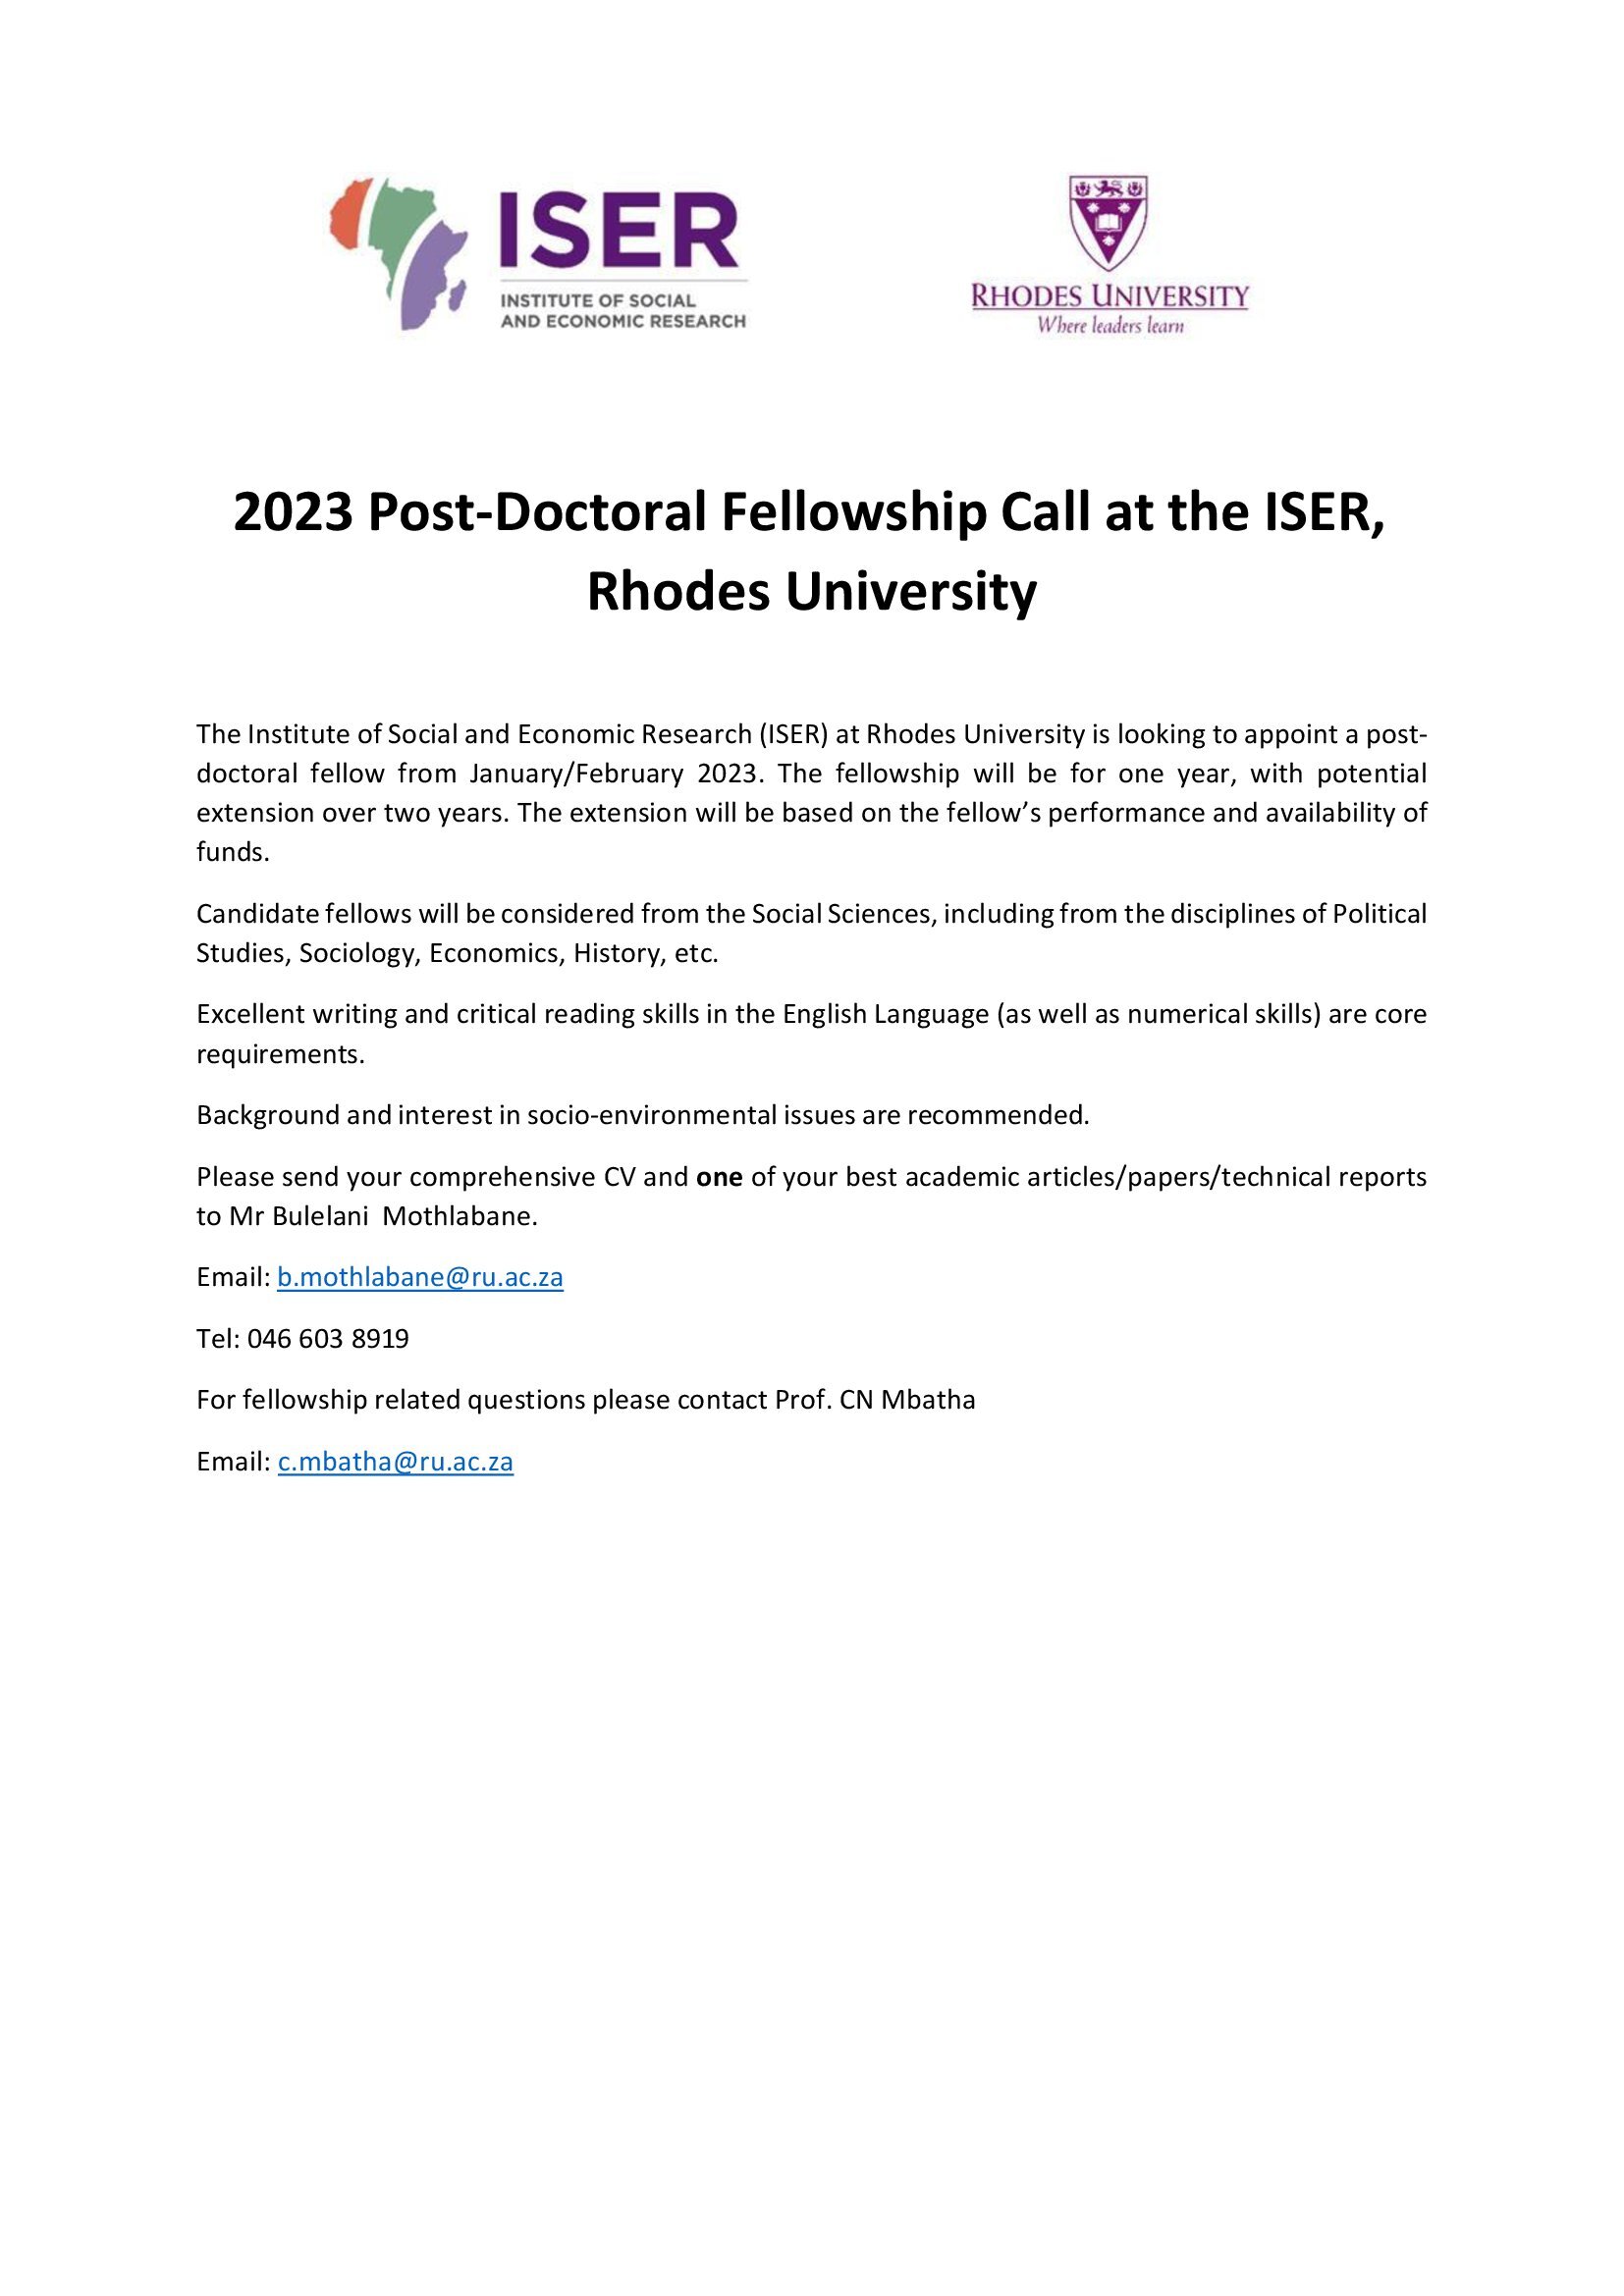 ISER Post Doctoral Fellowship 2023